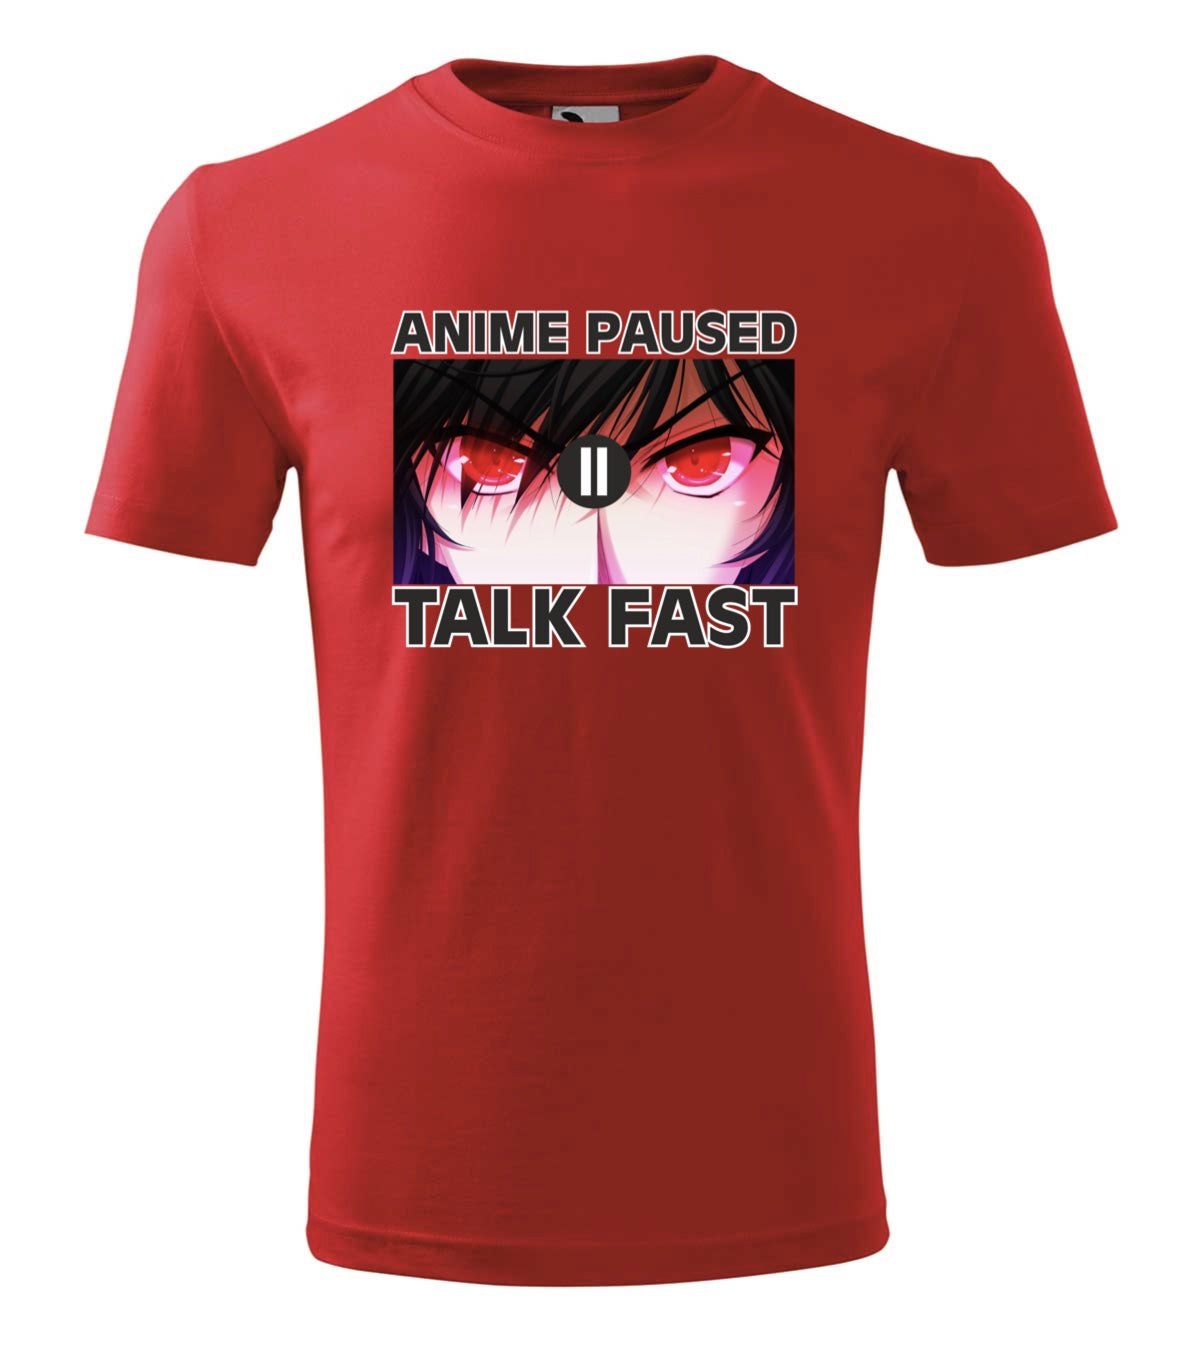 Anime Paused gyerek technikai póló